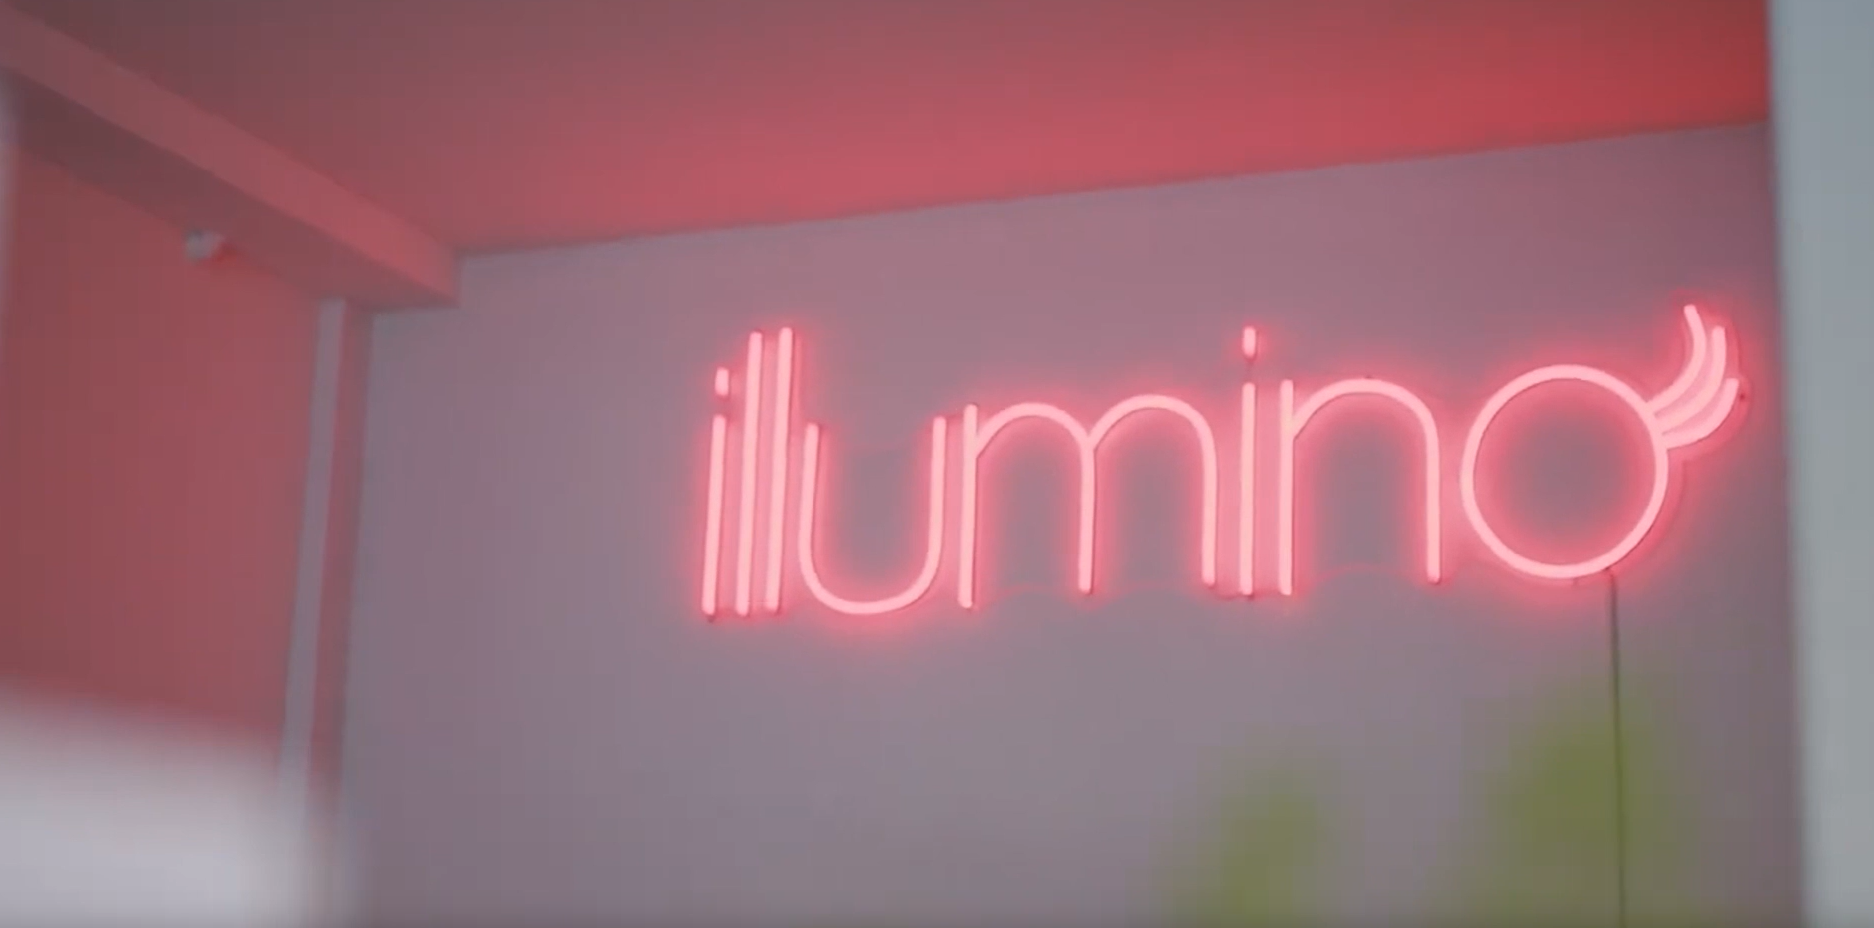 illumino紹介動画動画がロードされます。